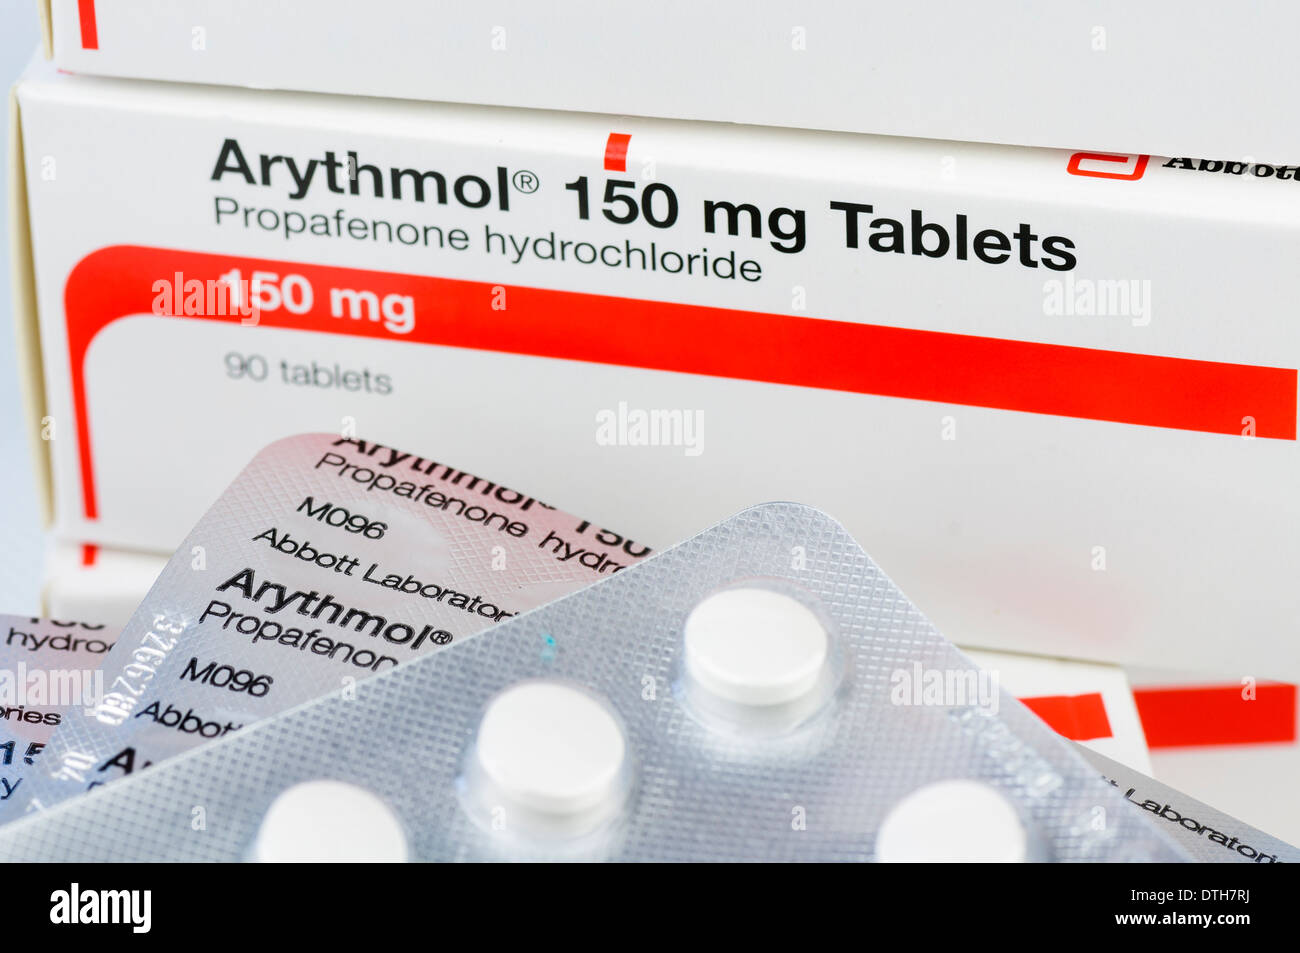 Arythmol (Propafenone hydrochloride) tablets, 150mg, used in the treatment of irregular heart rhythms. Stock Photo